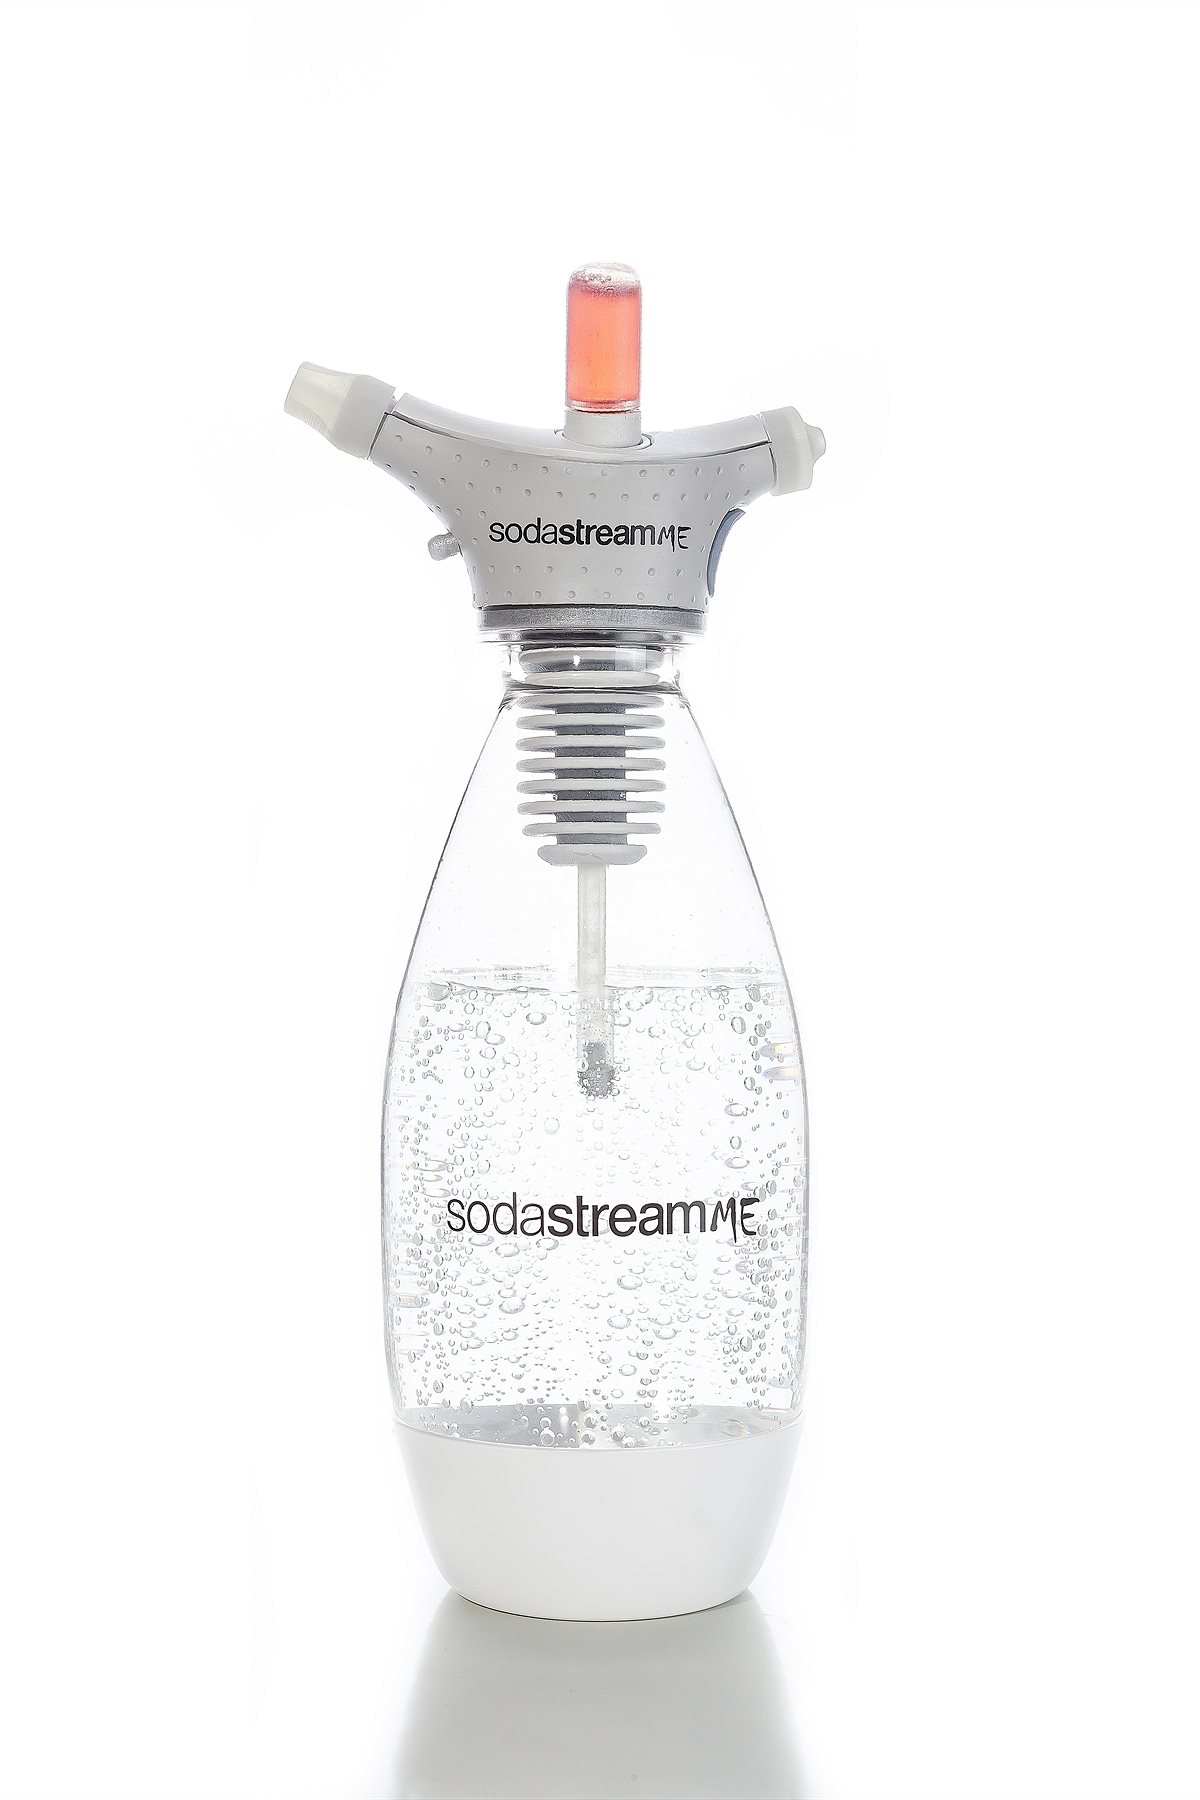 SodaStreamME